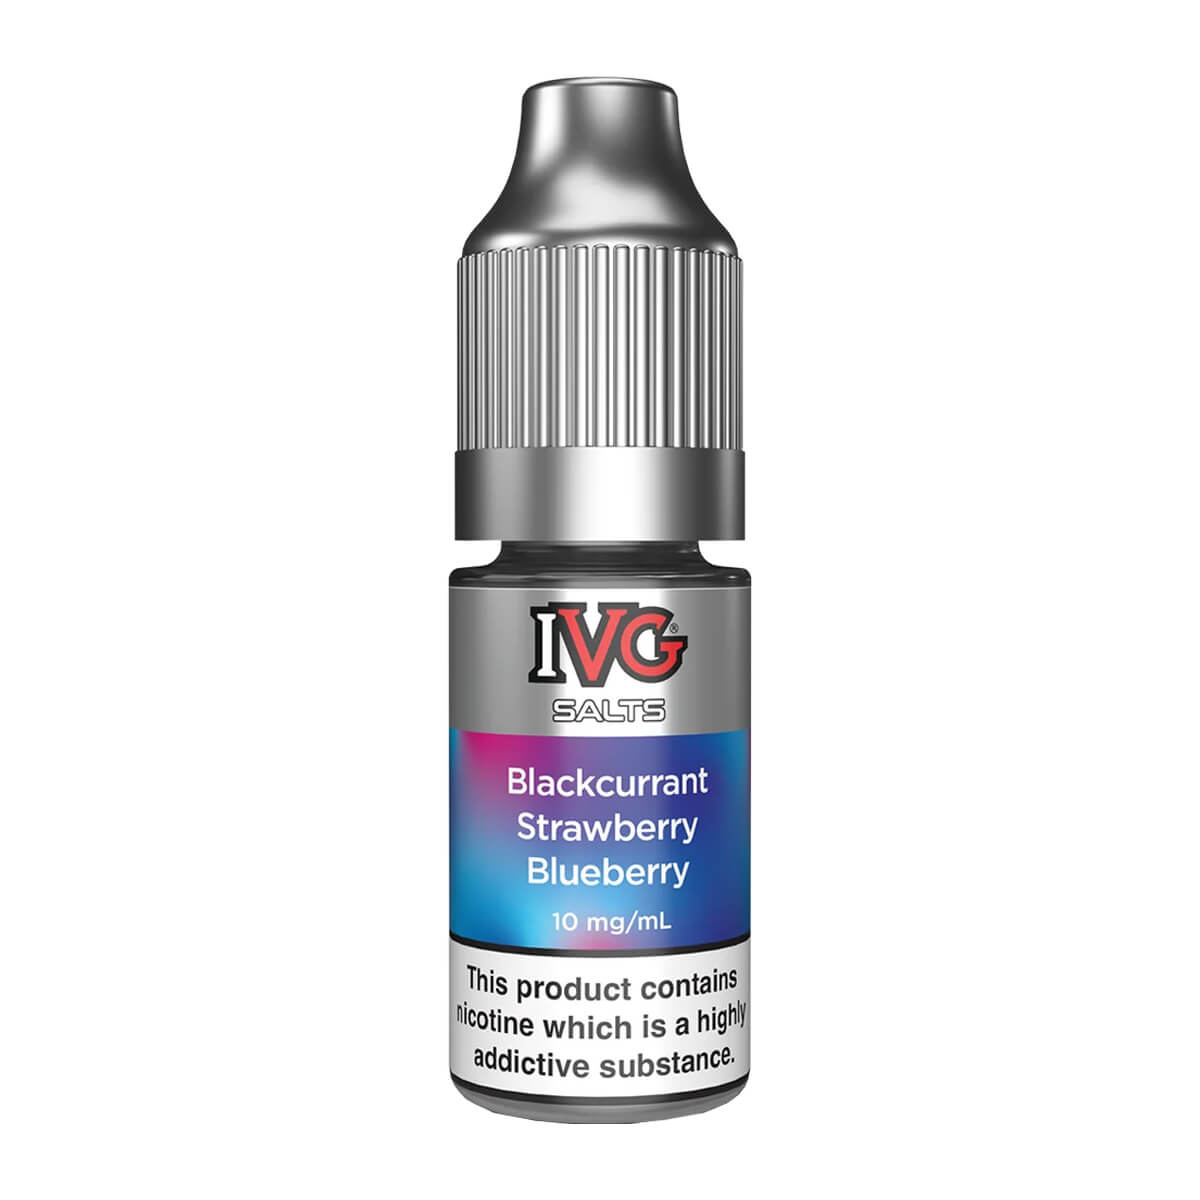 Blackcurrant Strawberry Blueberry Nic Salt E-Liquid by IVG